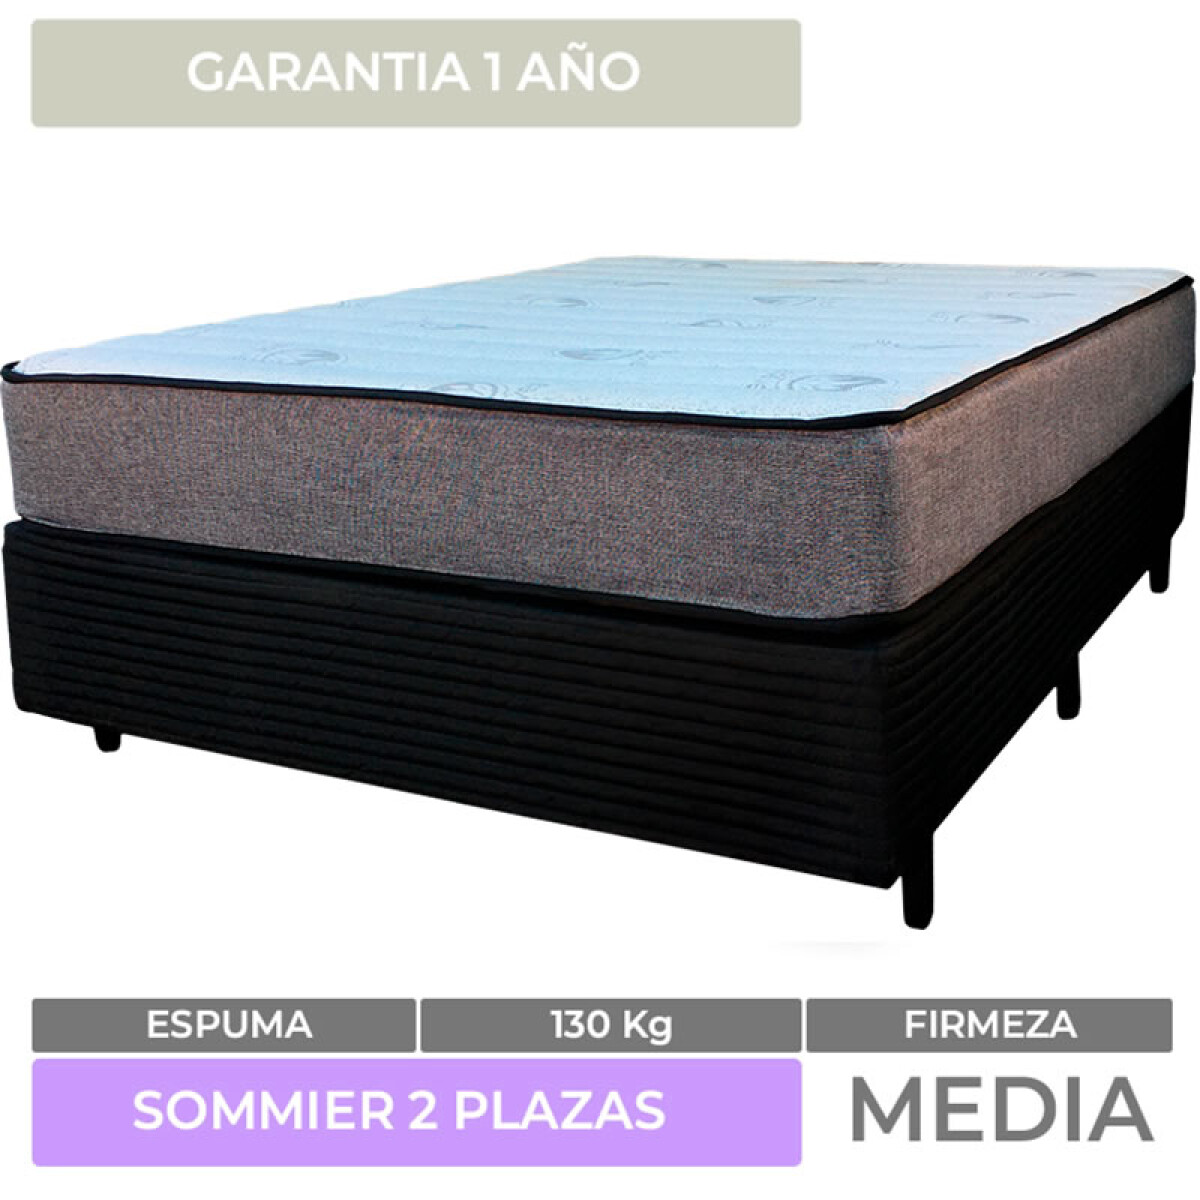 Sommier 2 Plazas Box y Colchón Mulata Densidad Reversible 100% Espuma 138 x 188 x 66 cm - 130 Kg 